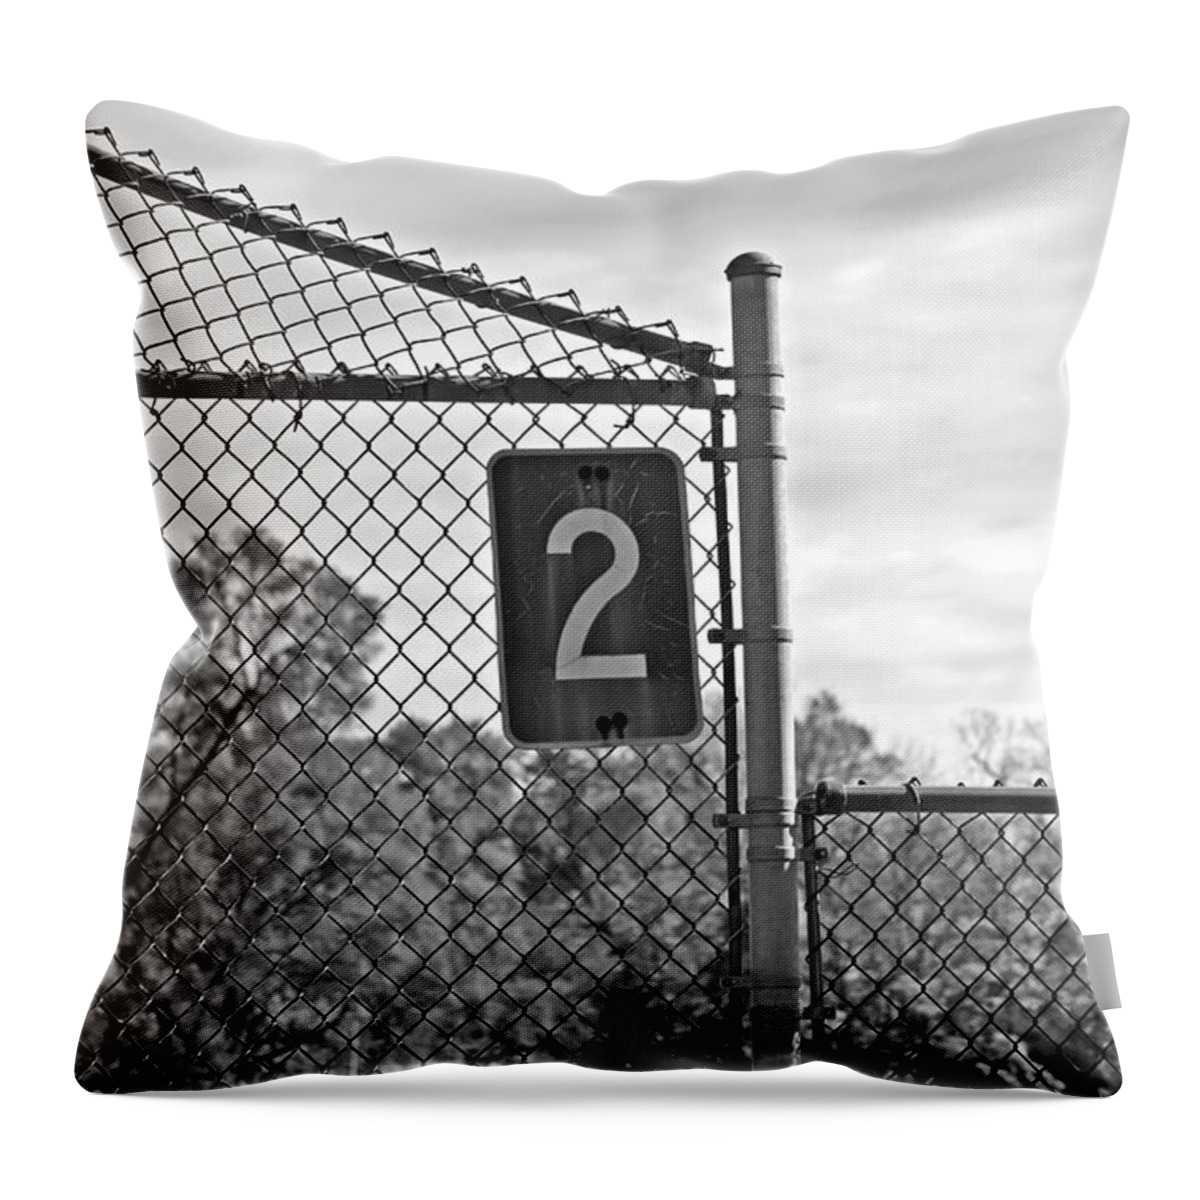 Baseball Field Number Two Throw Pillow featuring the photograph Baseball Field Number Two by Sandra Church